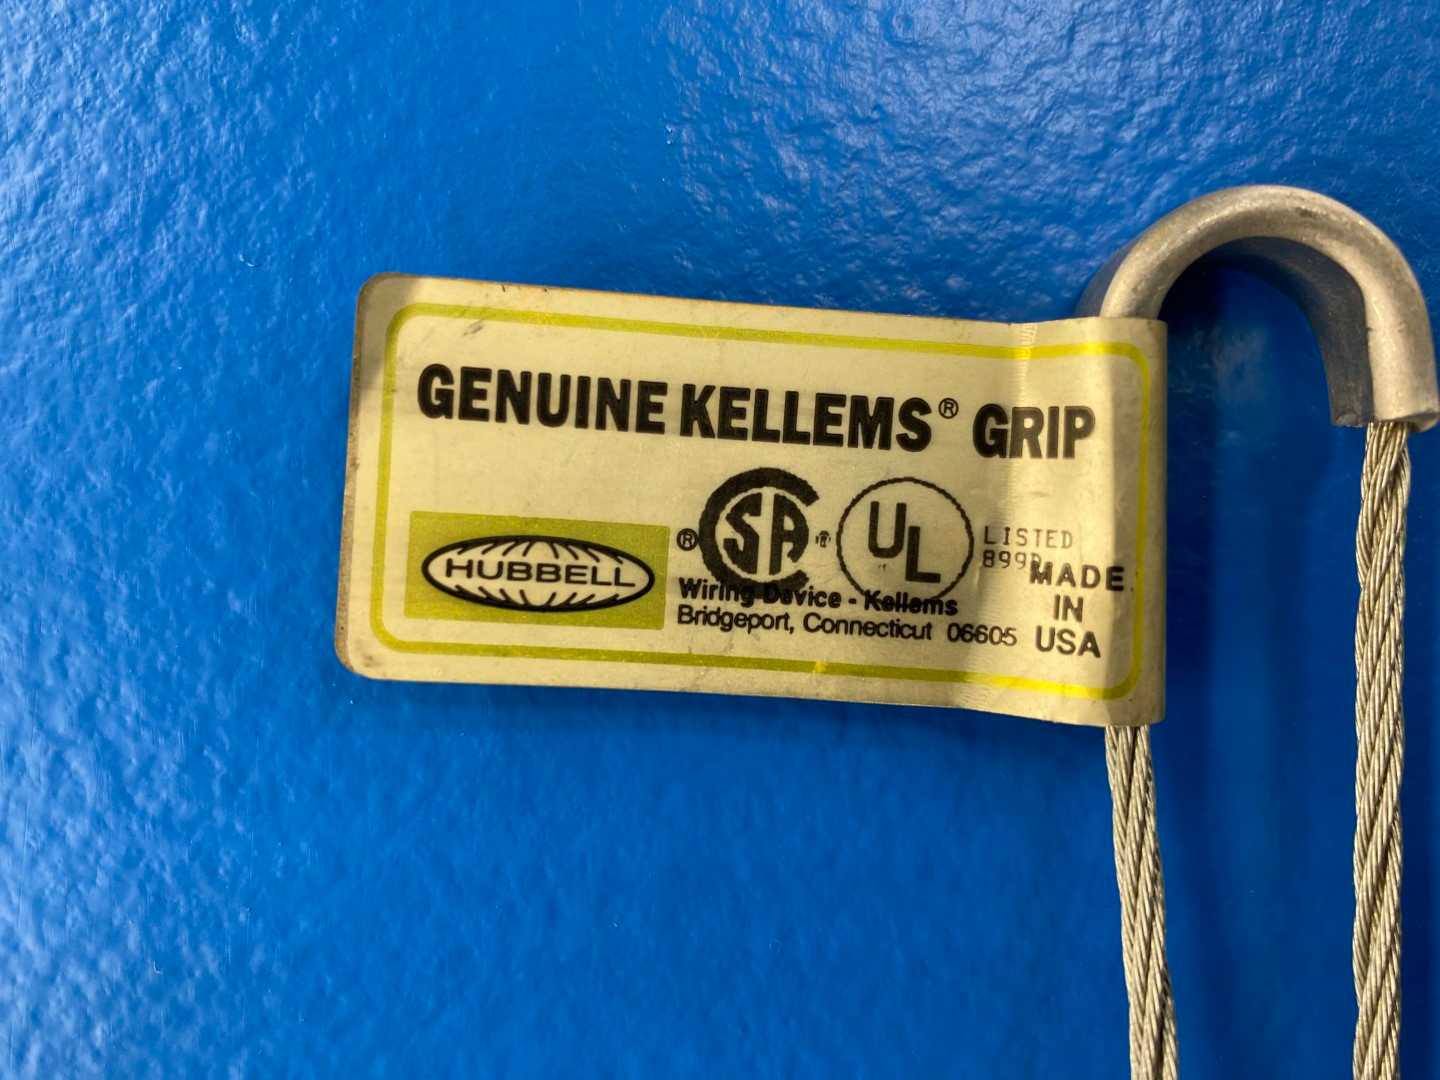 Hubbell Genuine Kellems Grip 073-04-1281  Cabe Puller range 0.85" to 1"